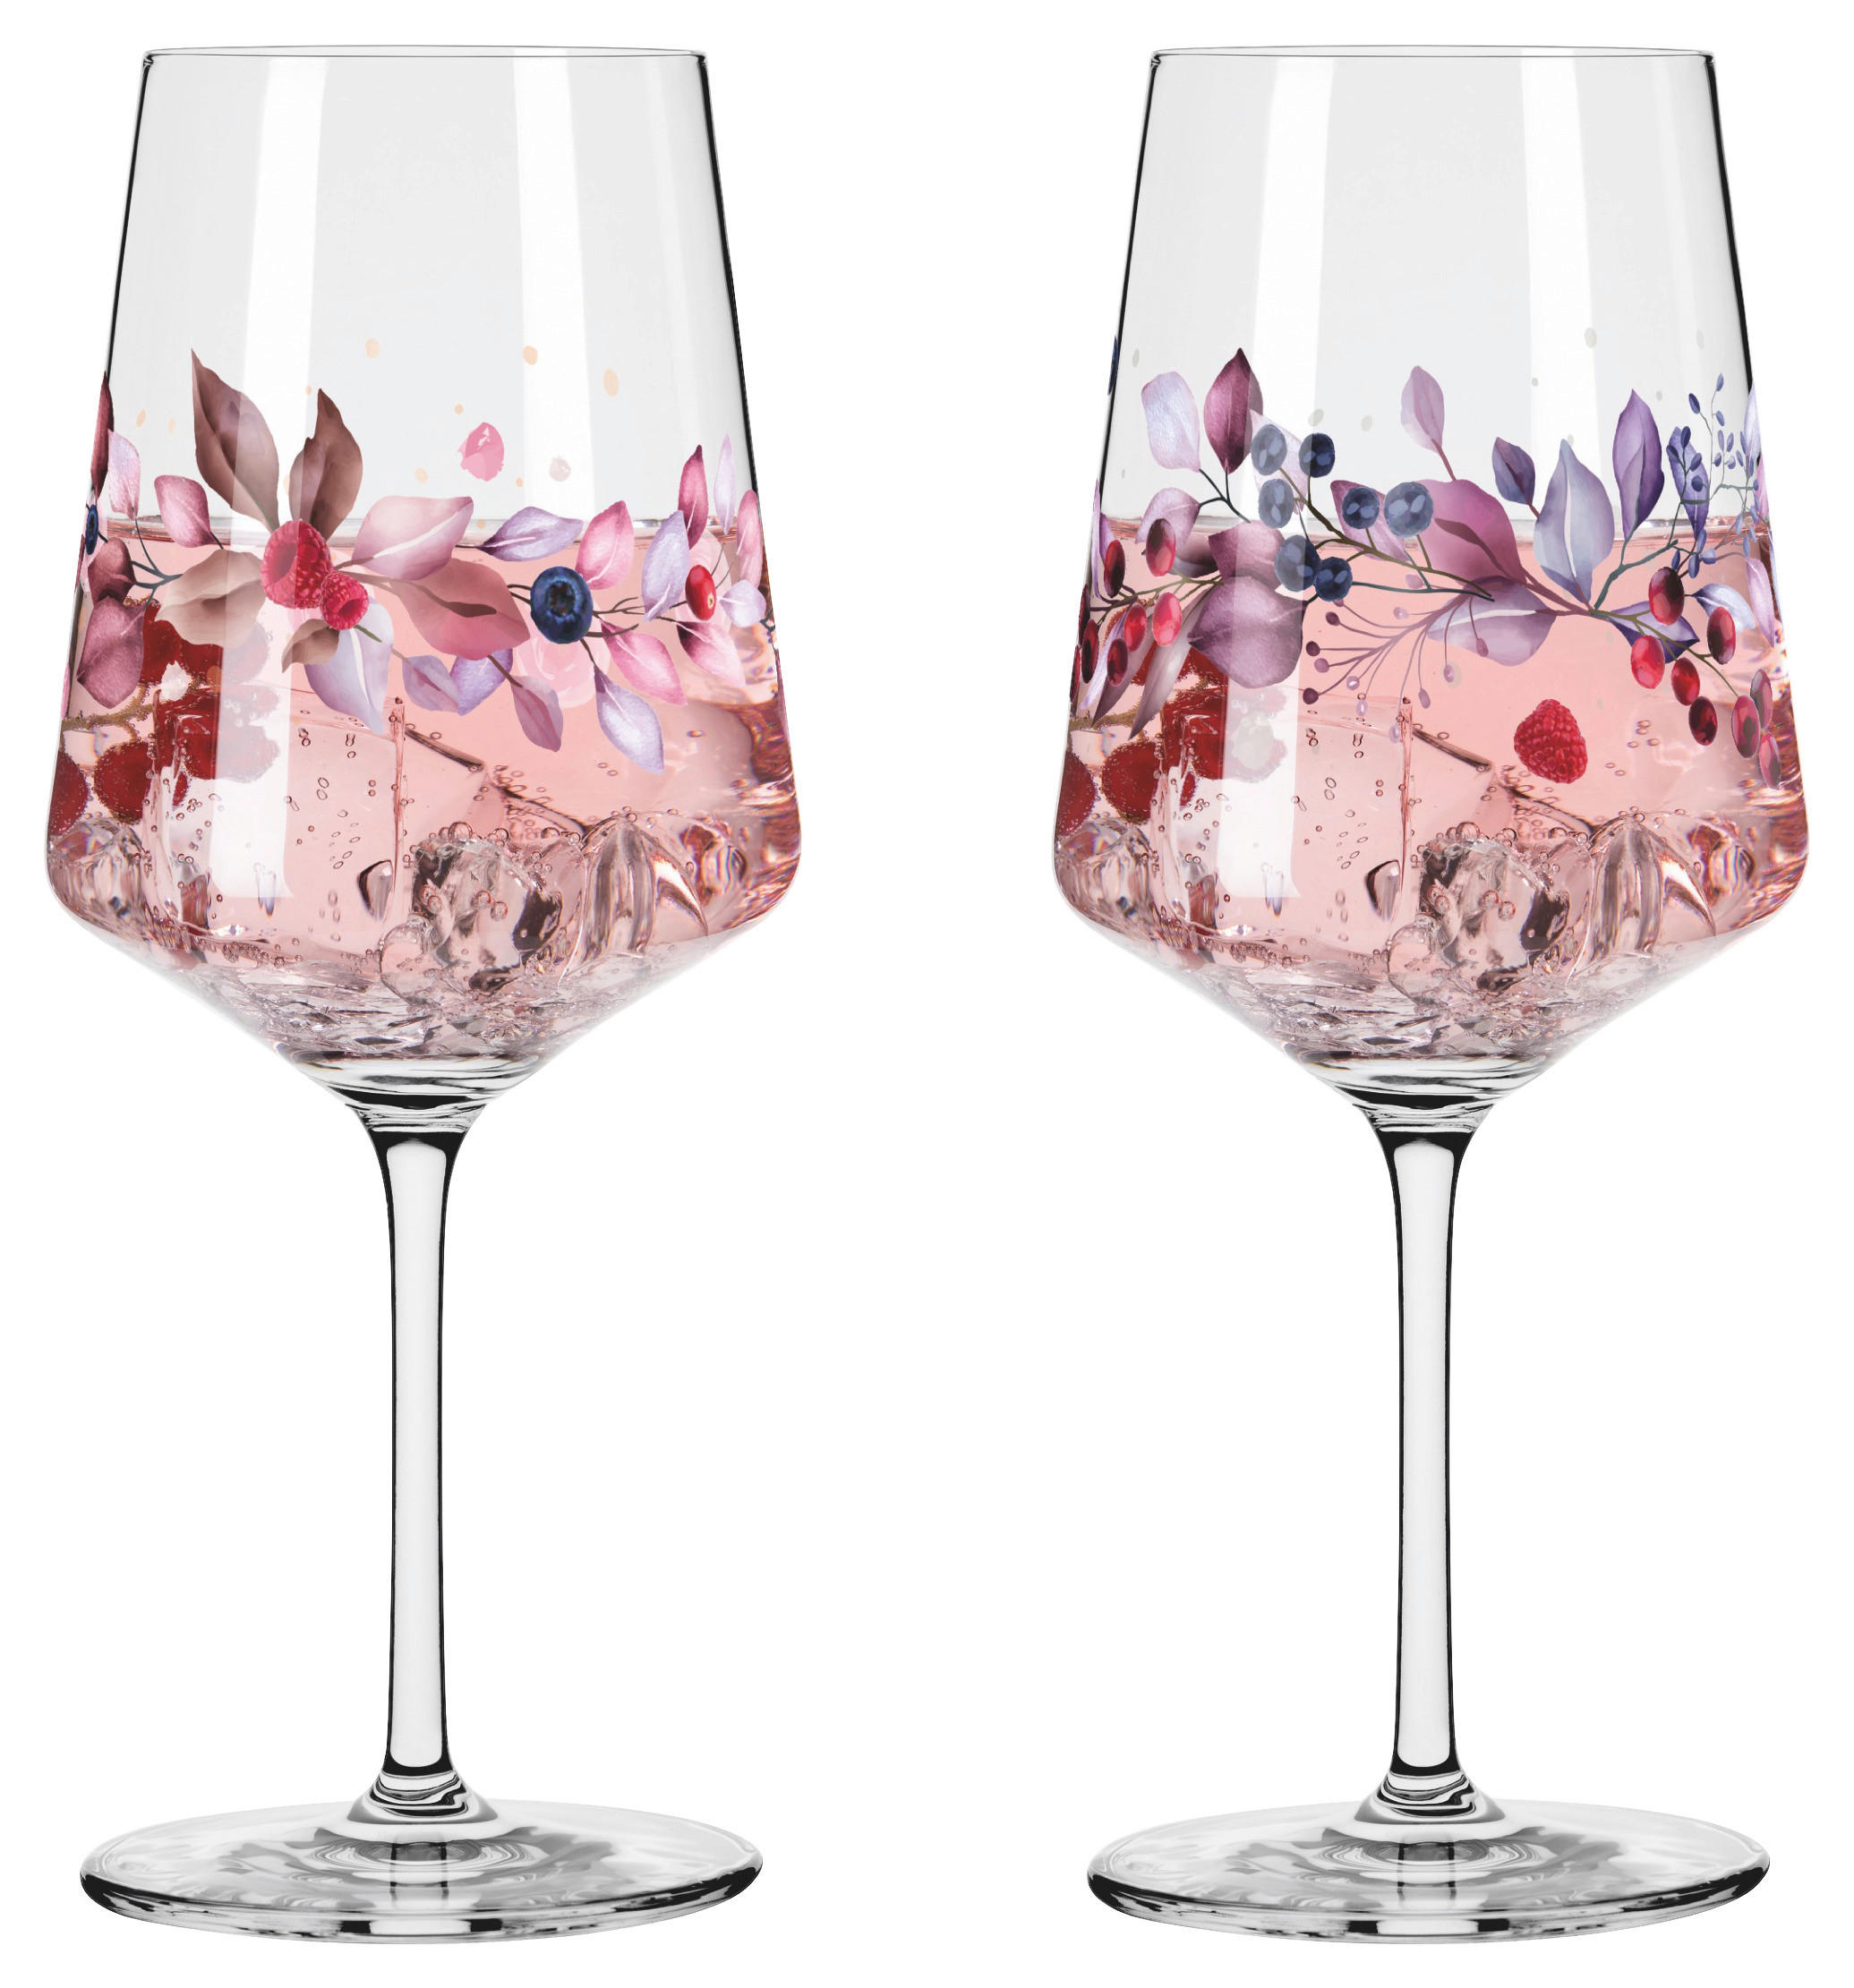 SPRITZERGLAS 544 ml  - Pink/Lila, LIFESTYLE, Glas (20,3/26,6/10,1cm) - Ritzenhoff